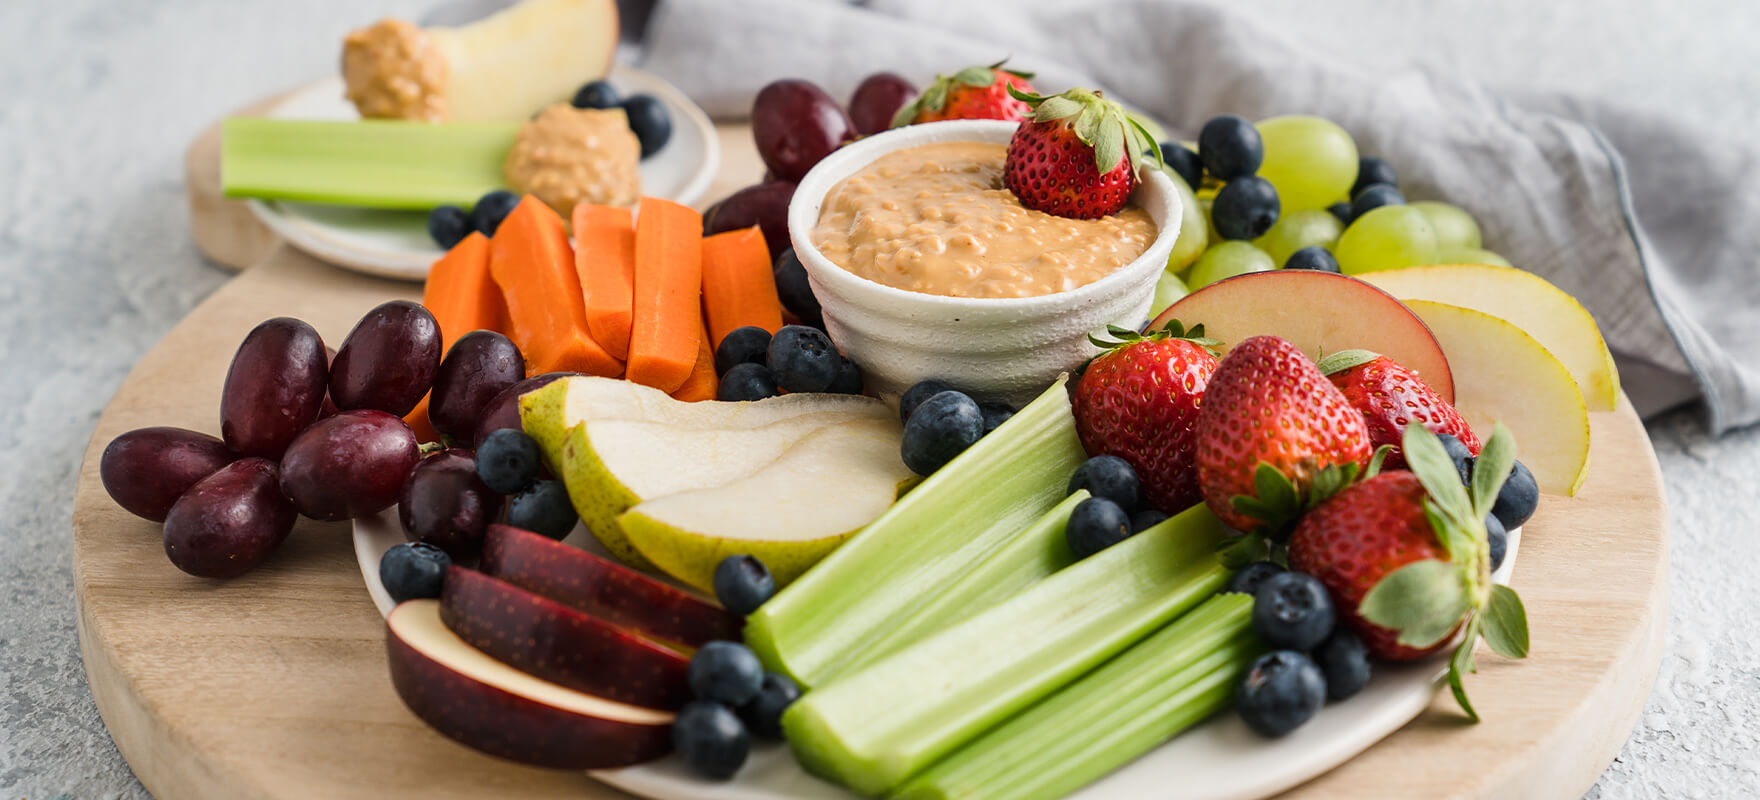 Peanut butter fruit & veggie platter | Sanitarium Health Food Company